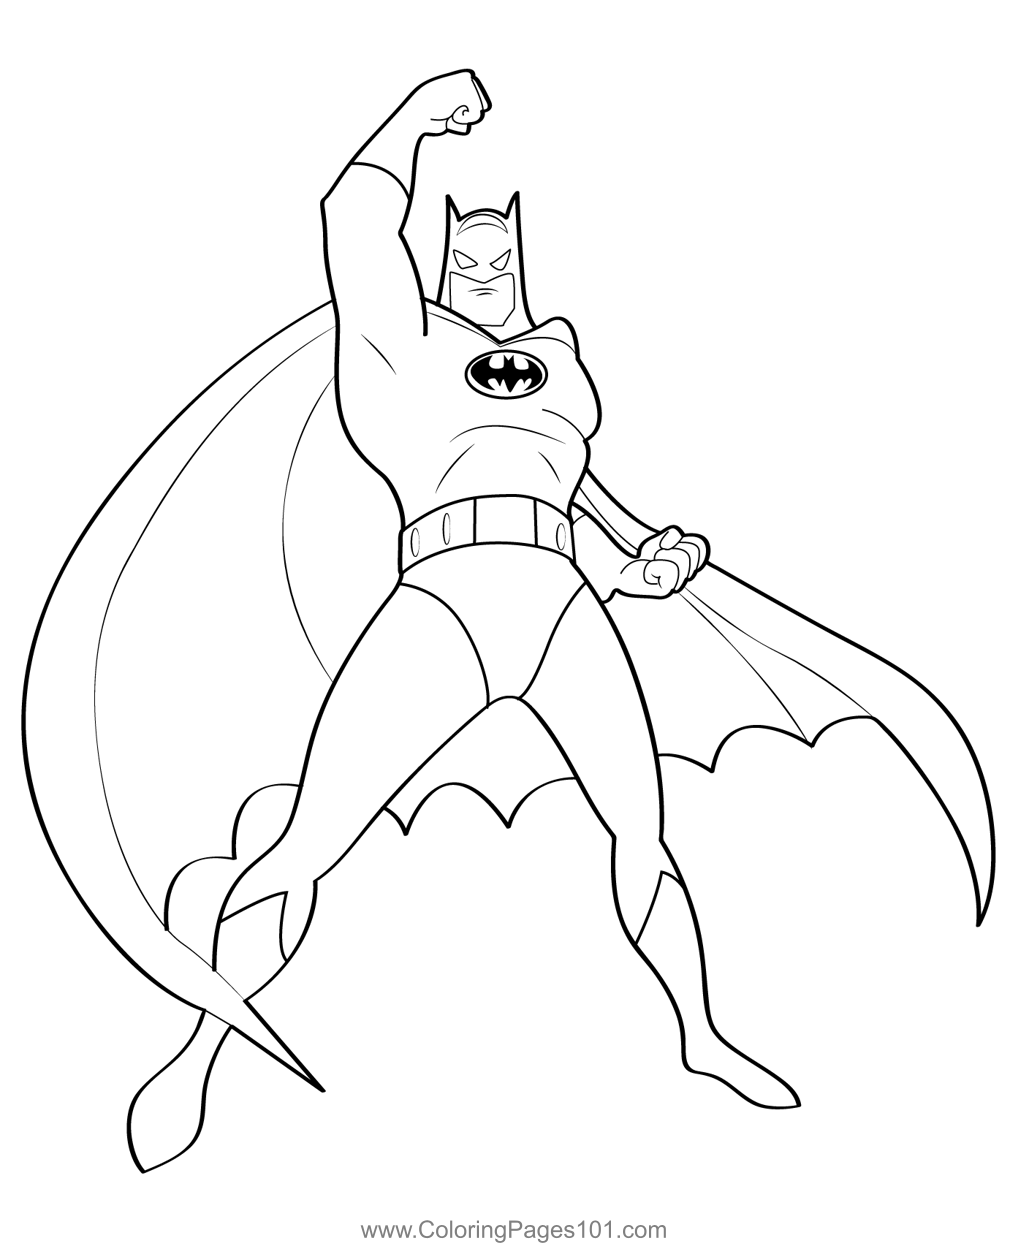 Batman Standing In Attitude